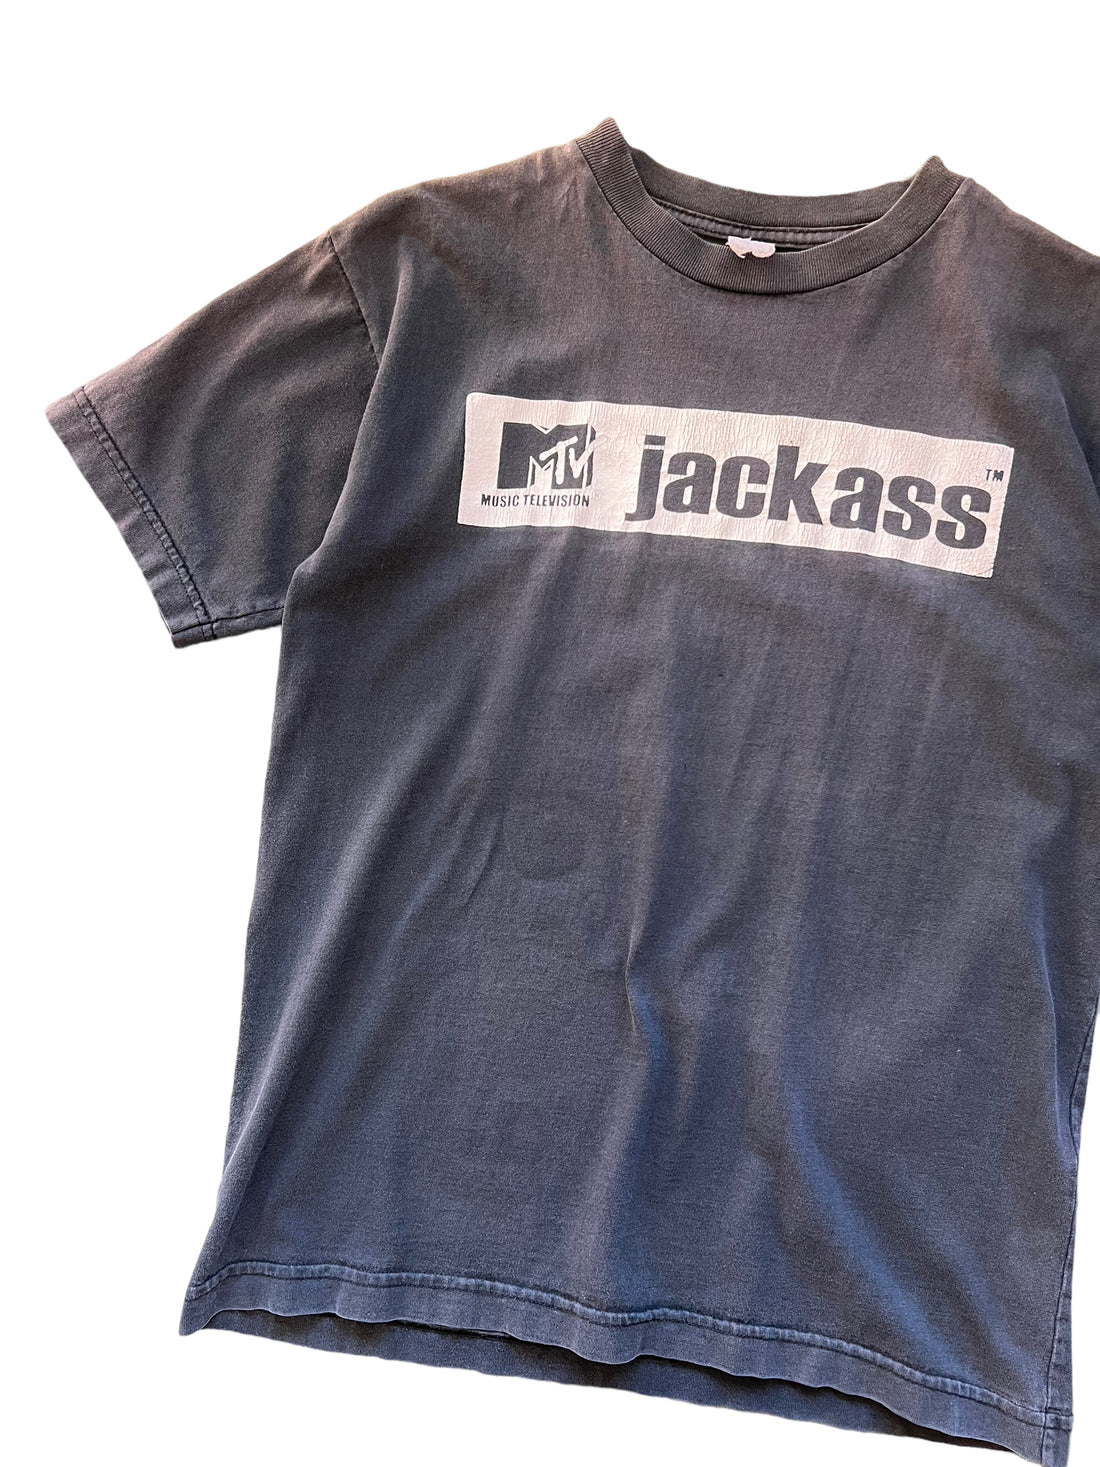 MTV’S JACKASS FADED BLACK T-SHIRT ‘SMALL’ - 2000S